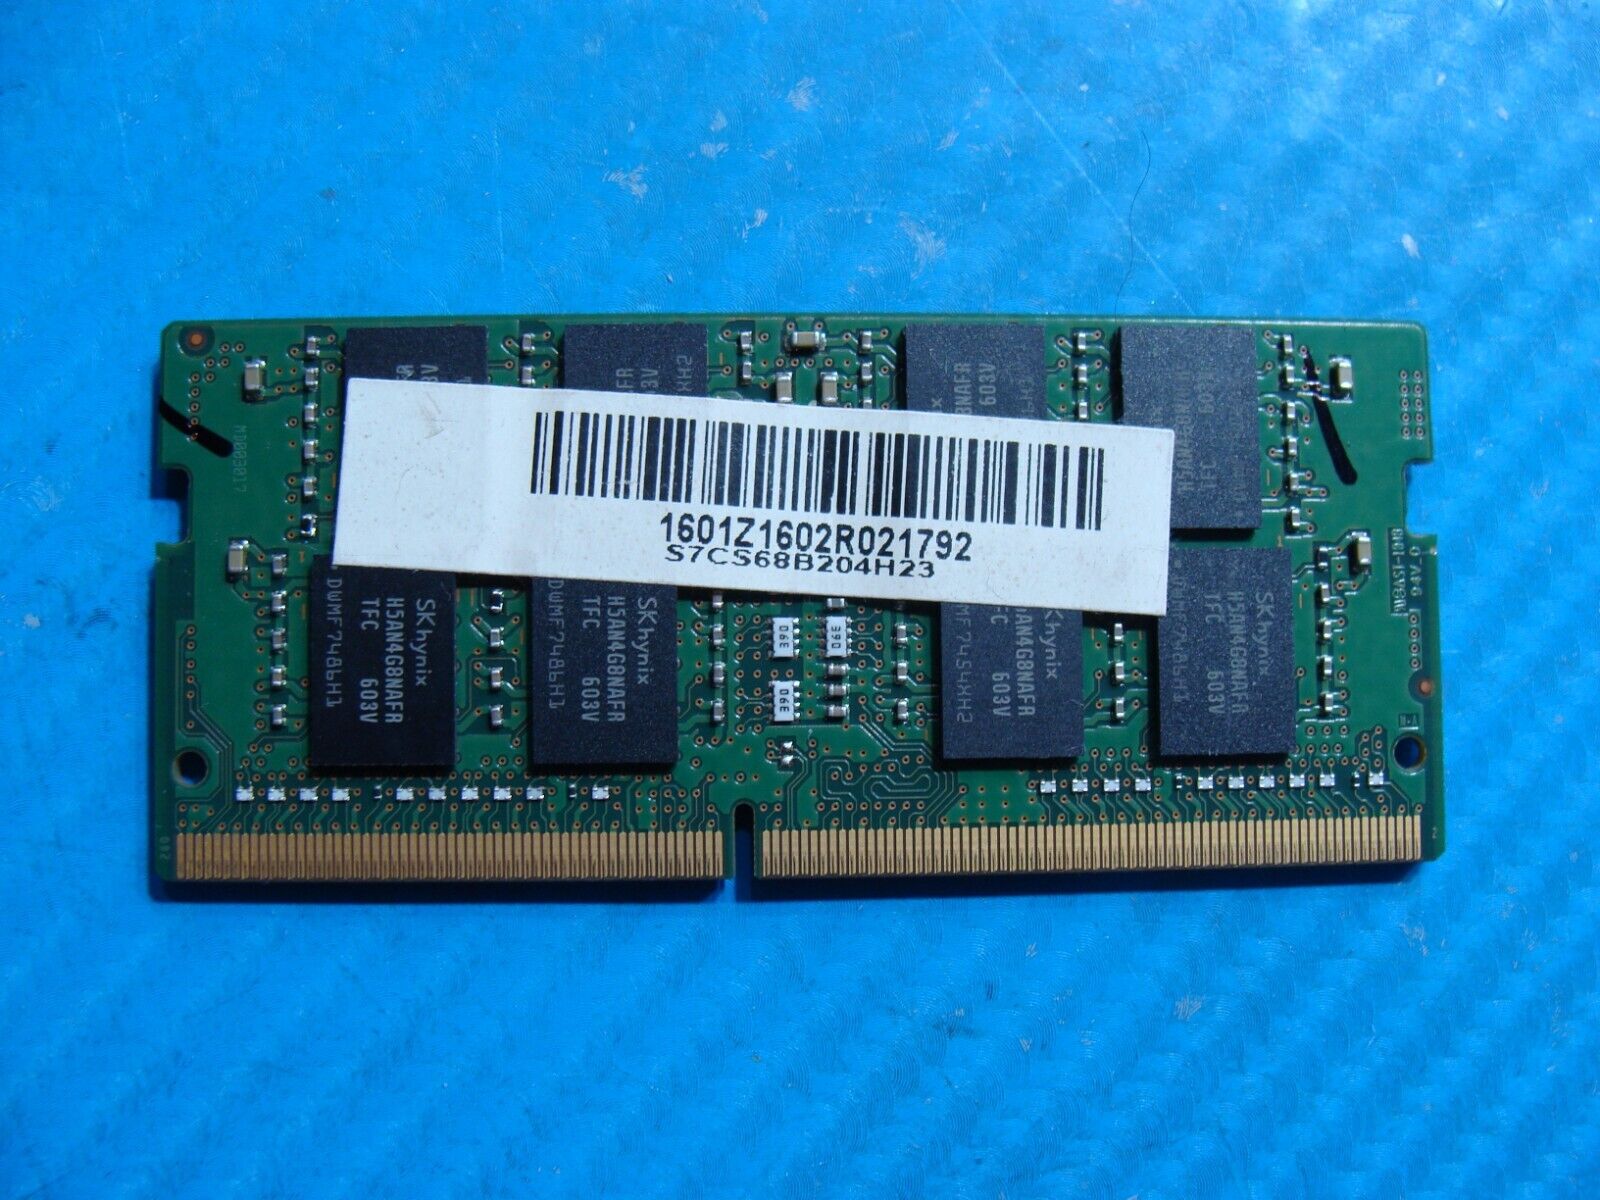 MSI GE62 6QD SK Hynix 8GB 2Rx8 PC4-2133P Memory RAM SO-DIMM HMA41GS6AFR8N-TF